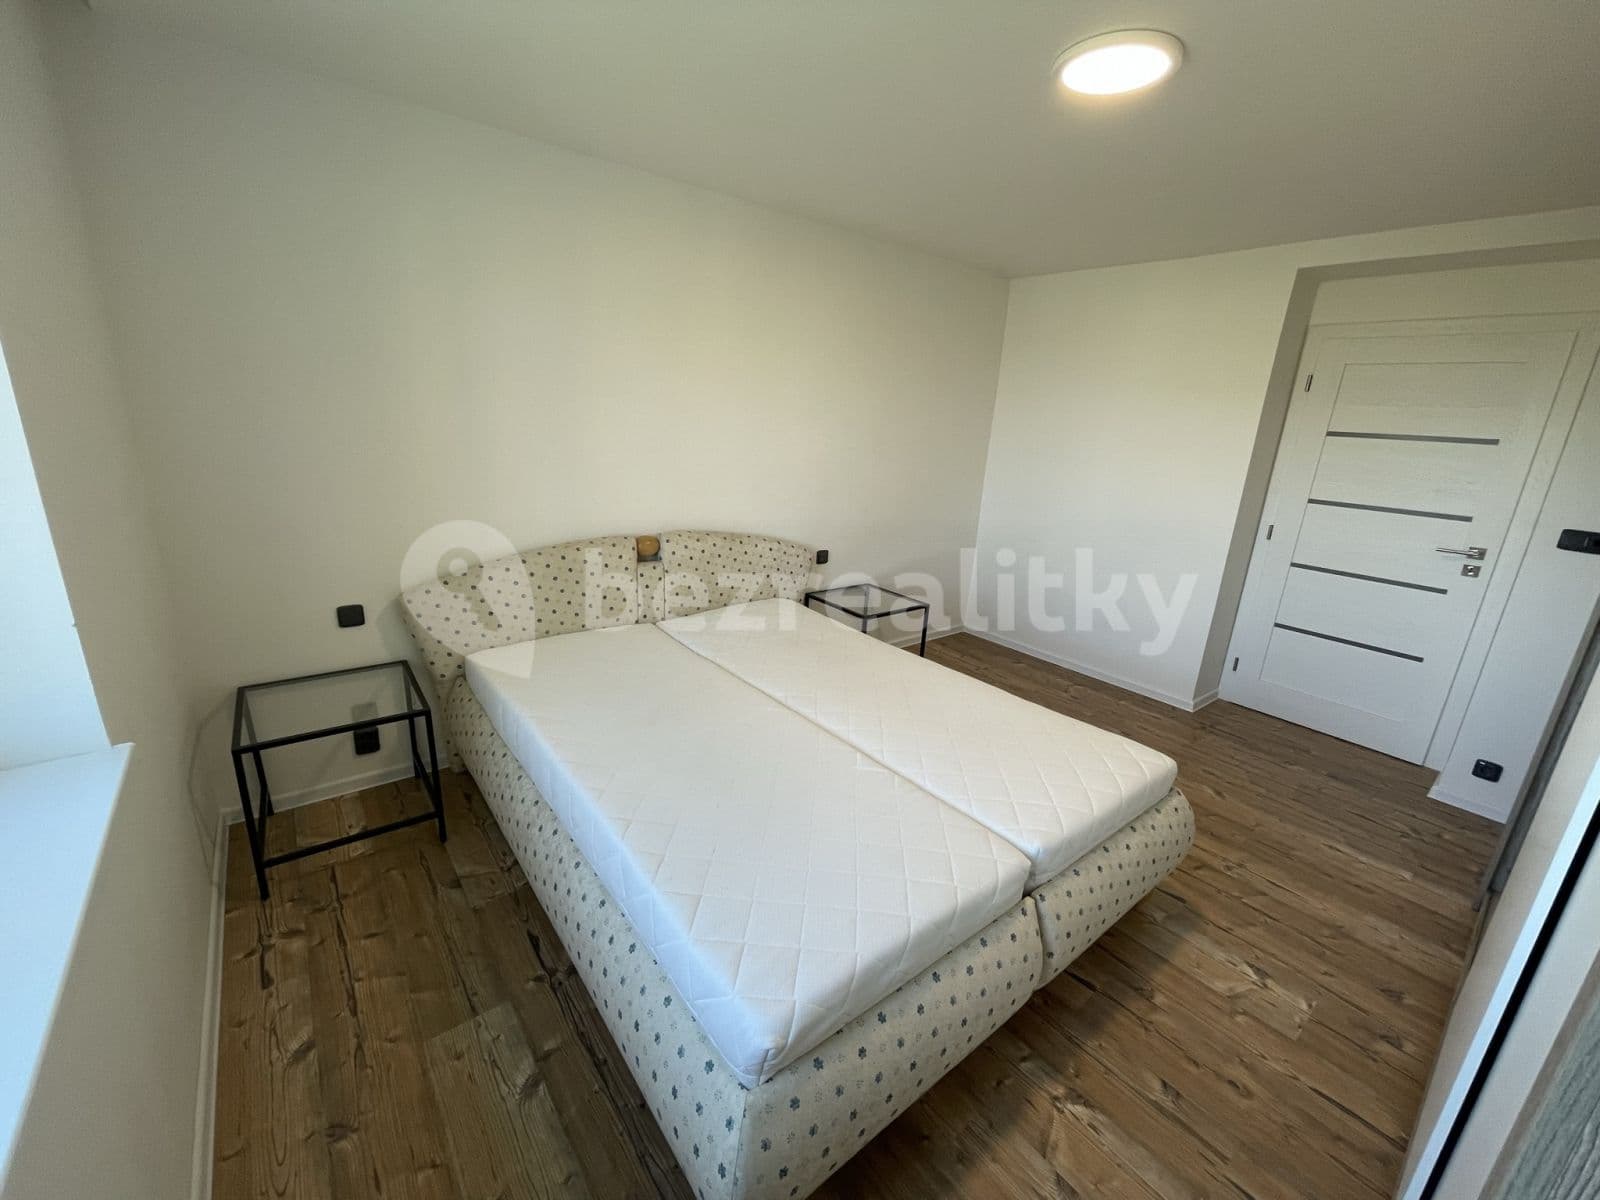 2 bedroom flat to rent, 62 m², Mohelnice, Olomoucký Region